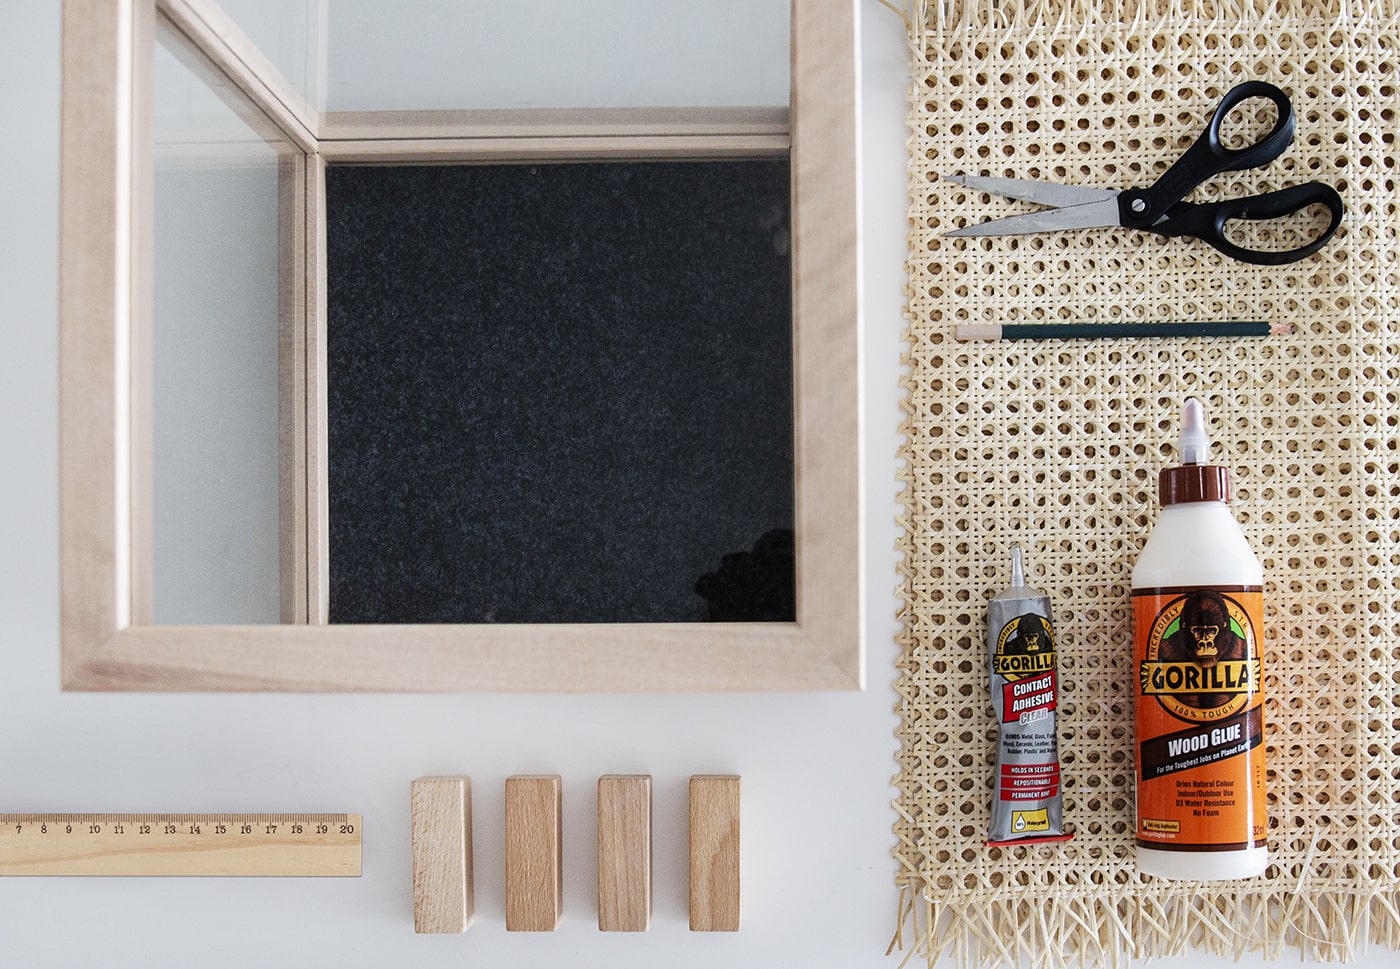 DIY Easy Rattan Storage Table With Gorilla Glue